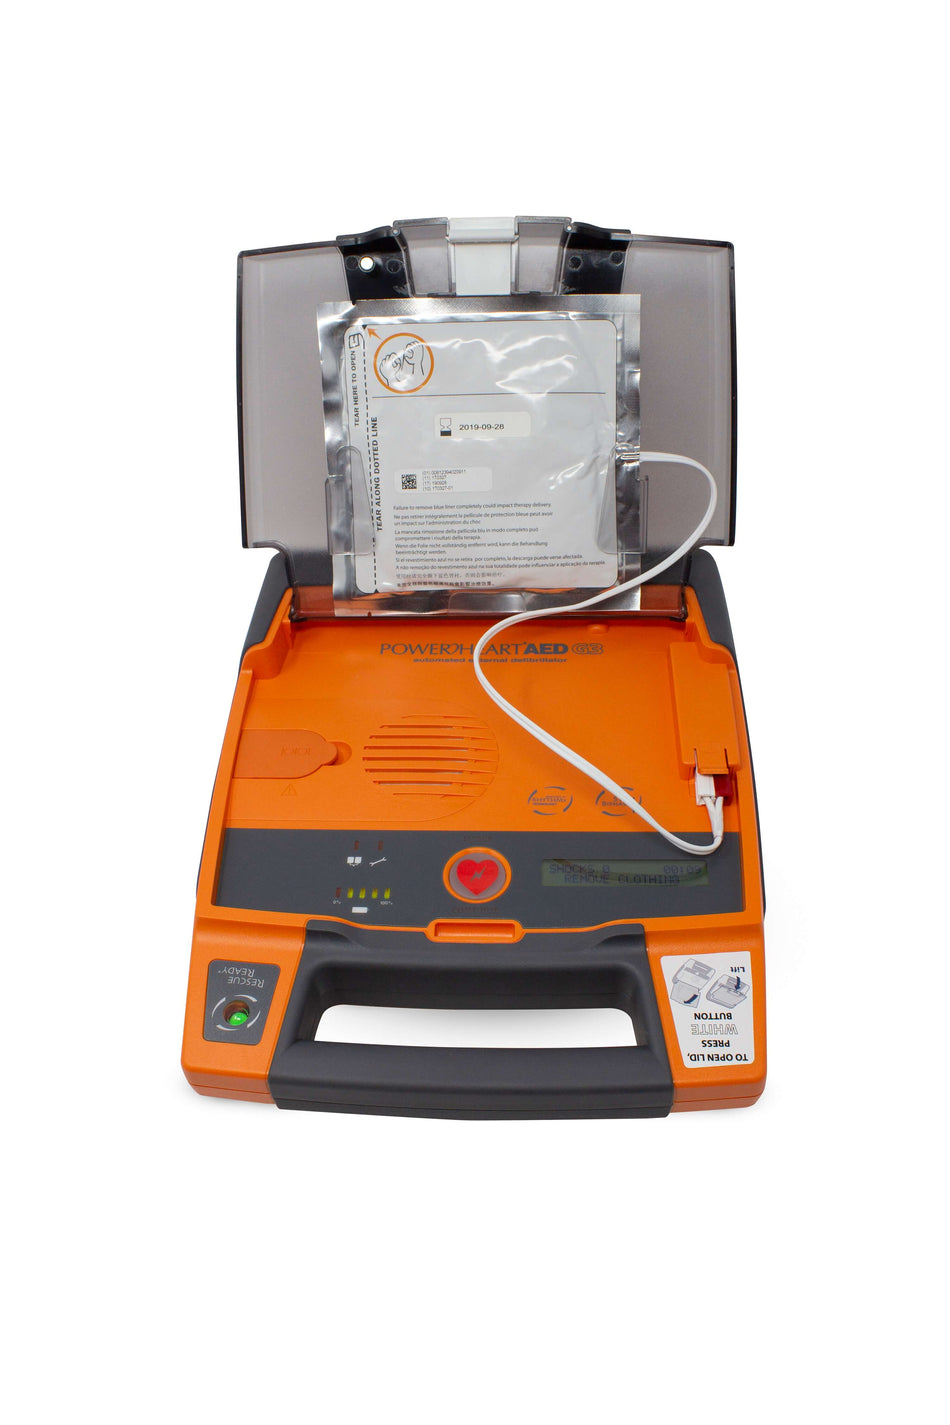 Defibrillator St John G3 Elite Semi Automatic -Deal